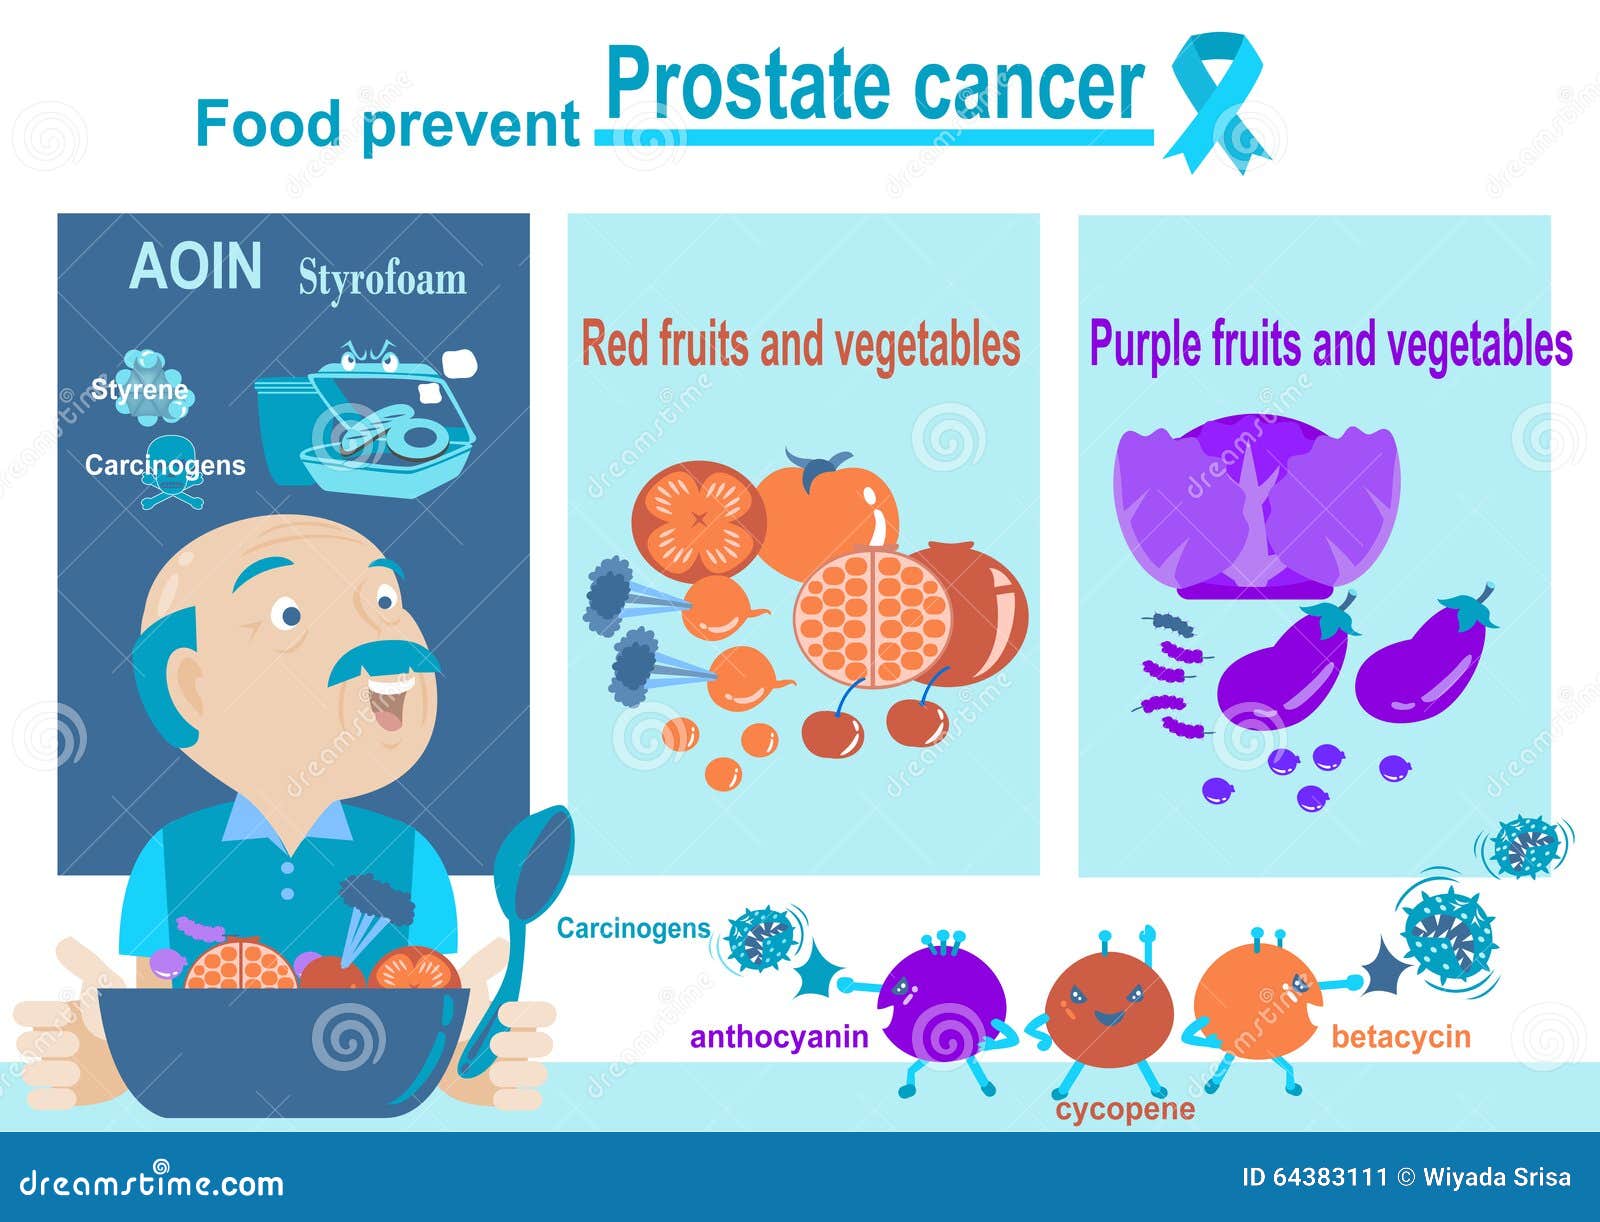 How prevent prostate cancer